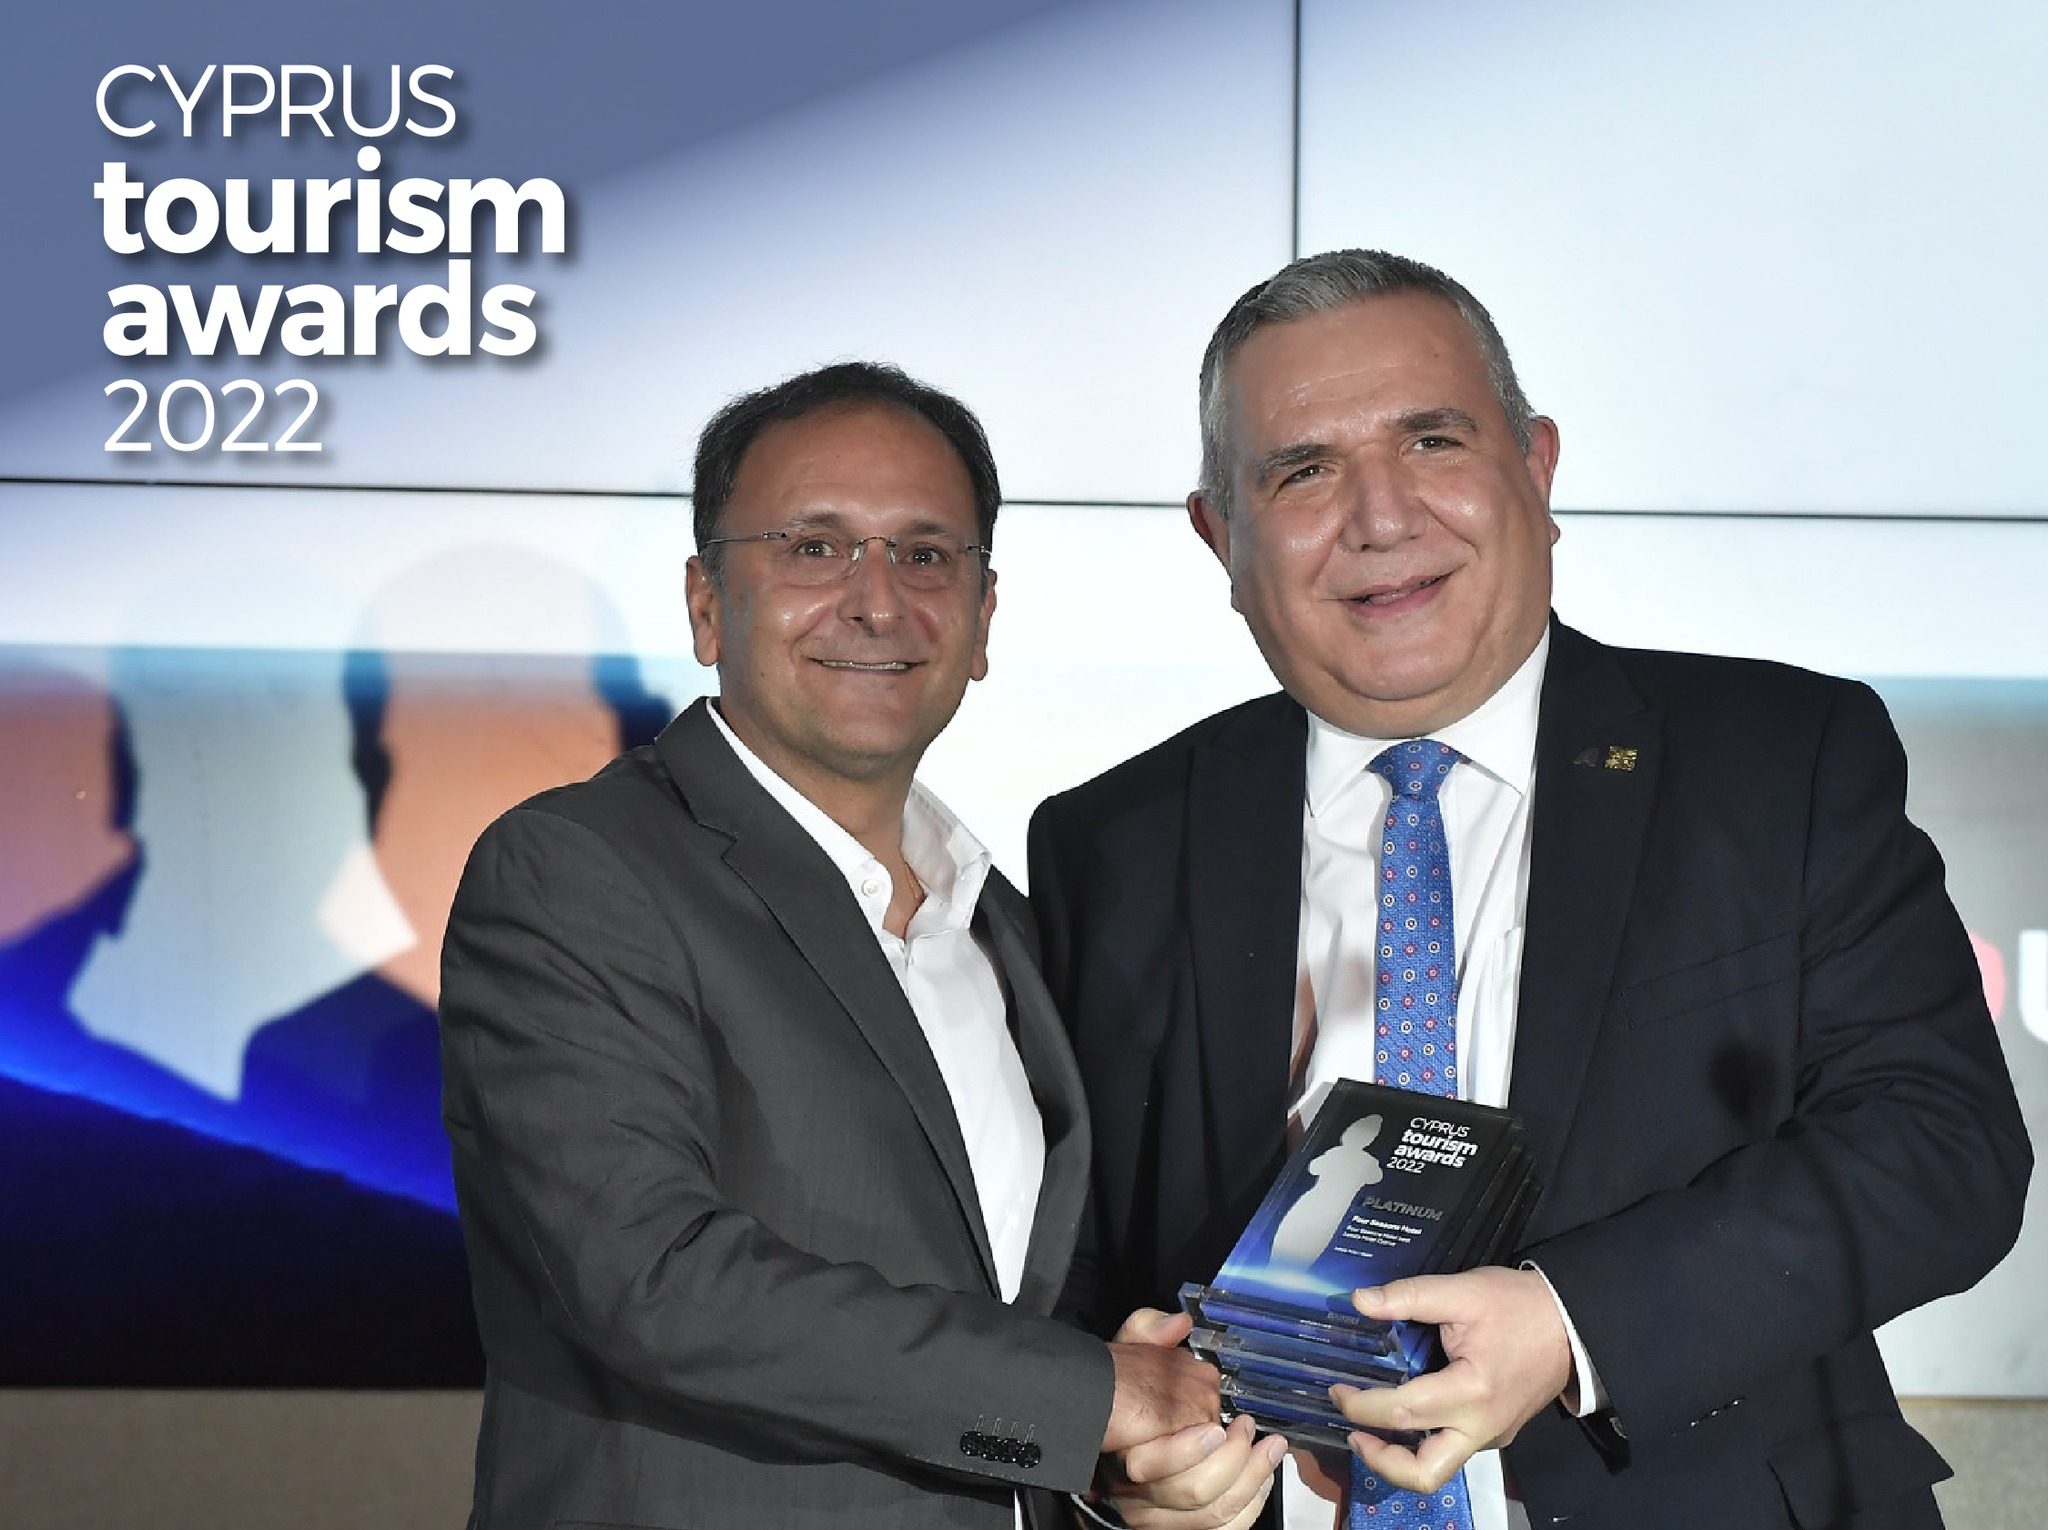 Cyprus Tourism Awards 2022: Στην κορυφή για άλλη μια χρονιά τα ξενοδοχεία Four Seasons και Amathus